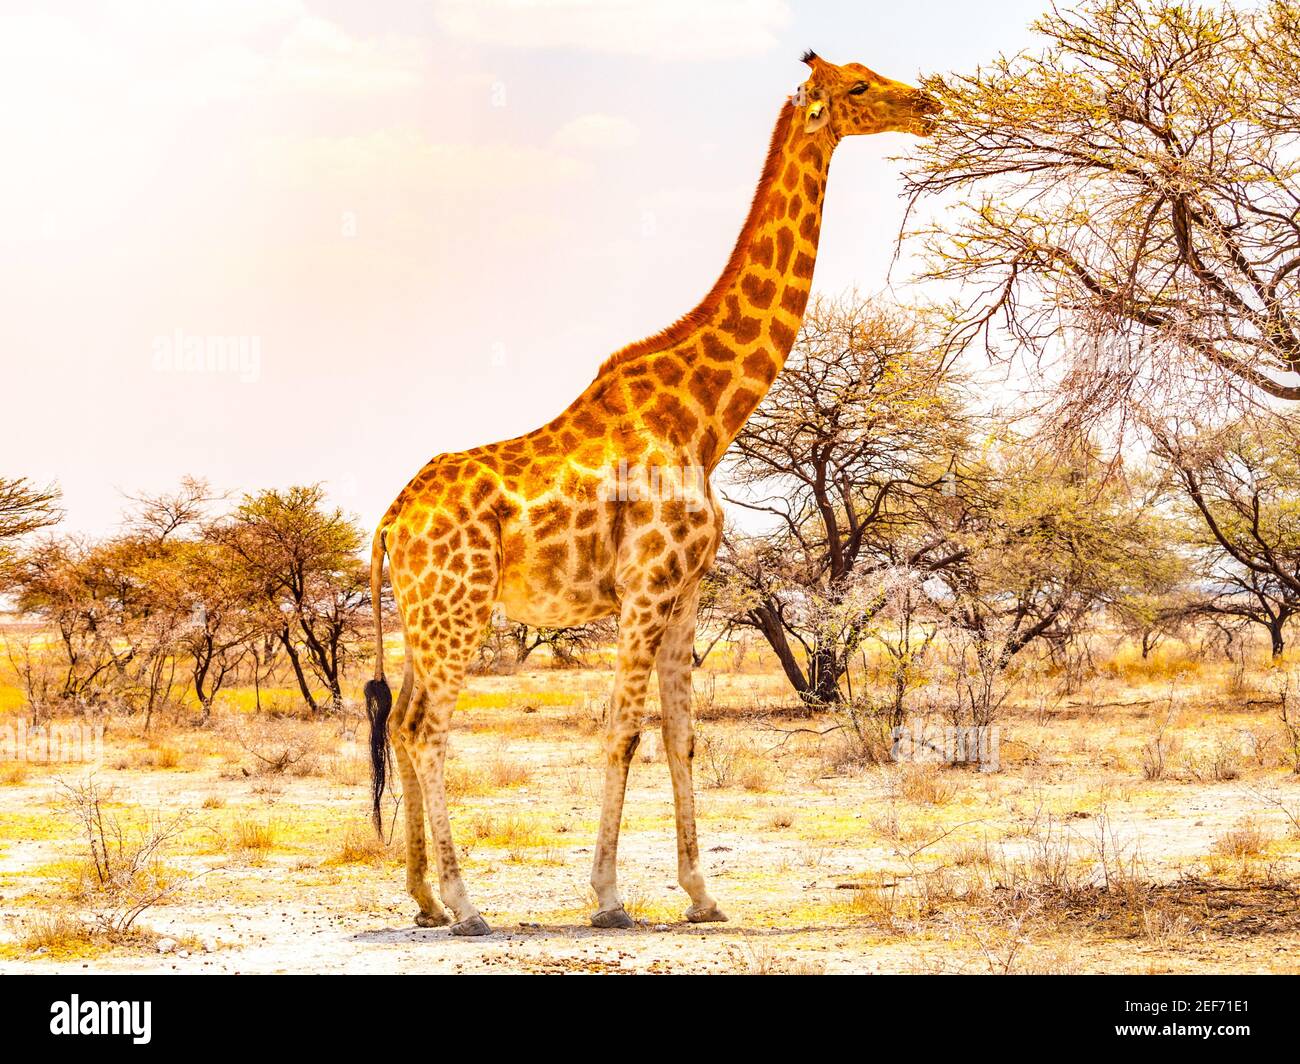 Giraffe eating leaves from tree Stock Photo